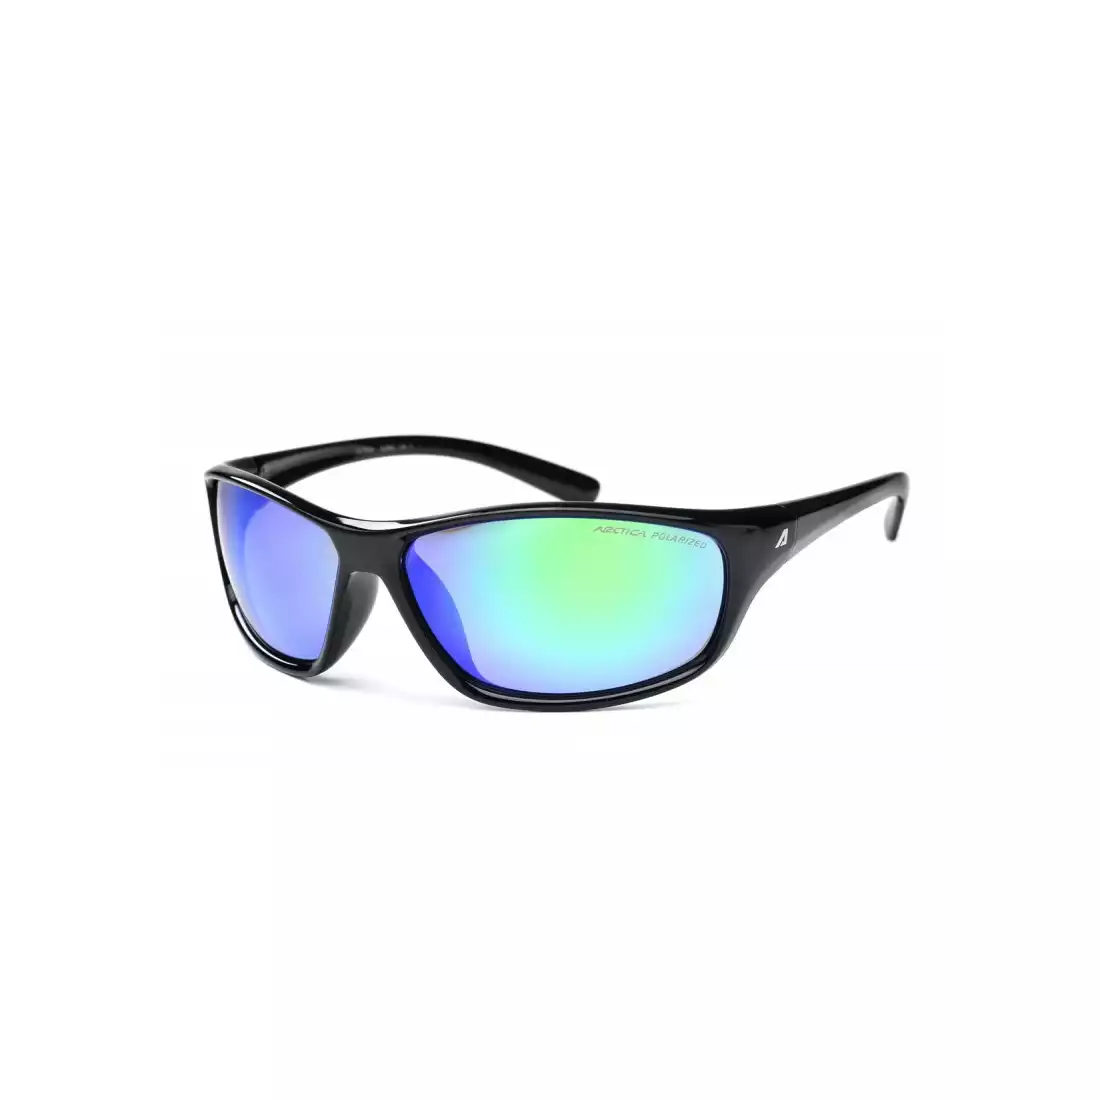 ARCTICA okulary sportowe, S 204C